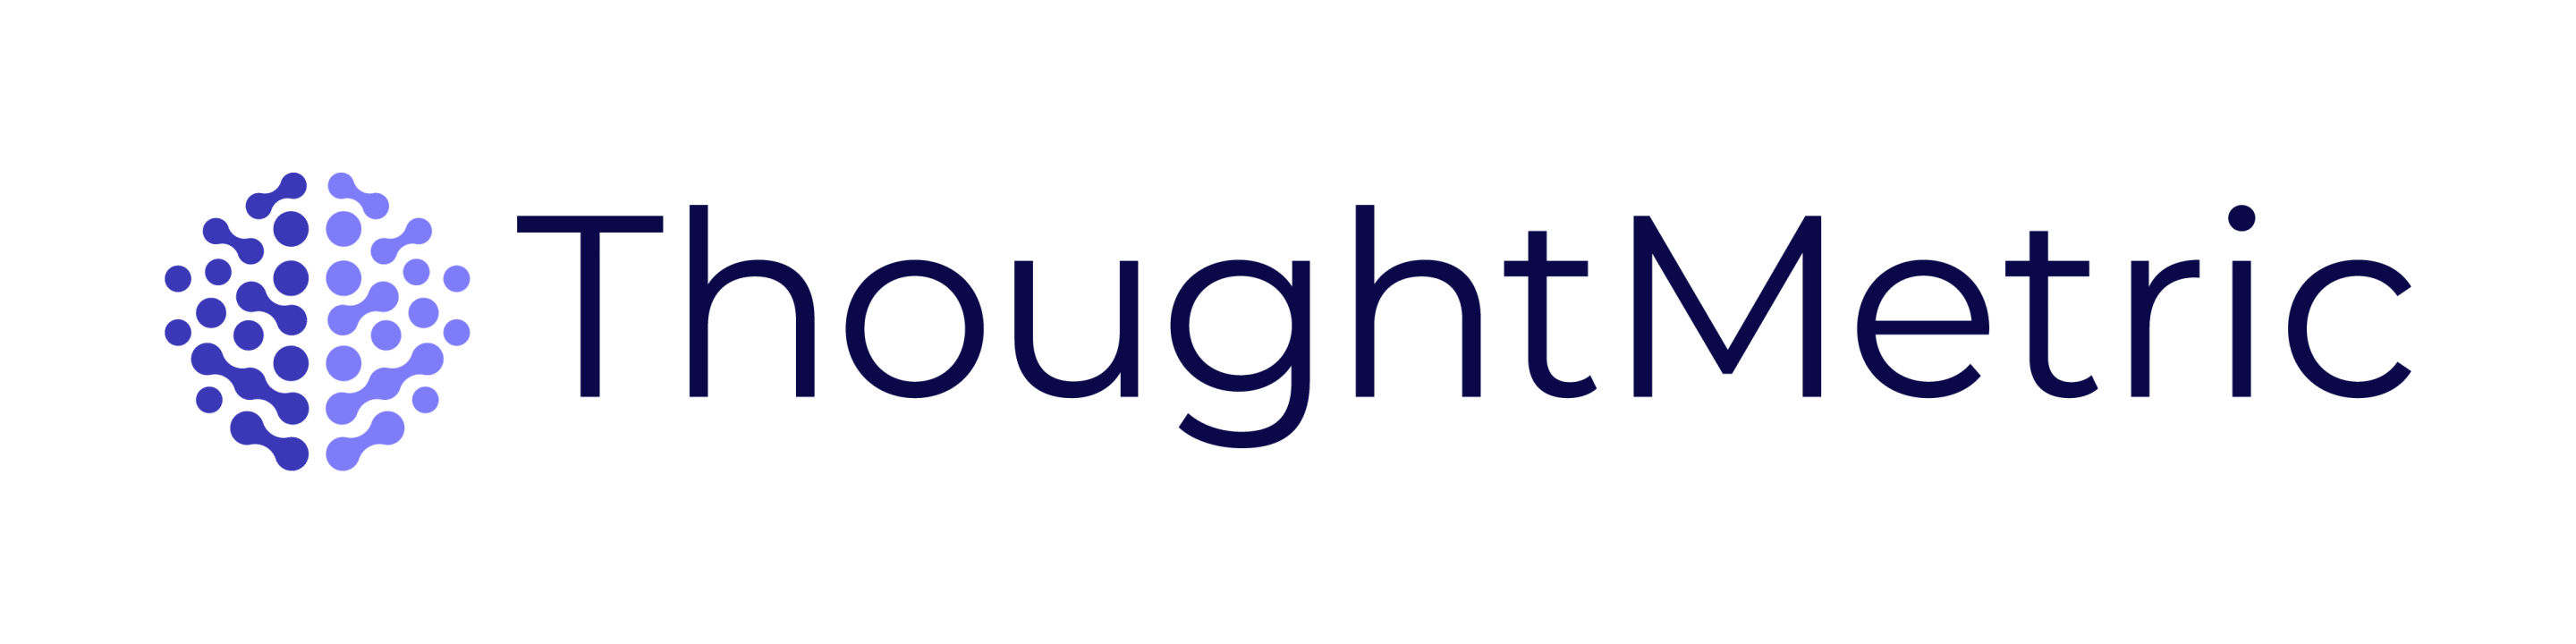 ThoughtMetric logo